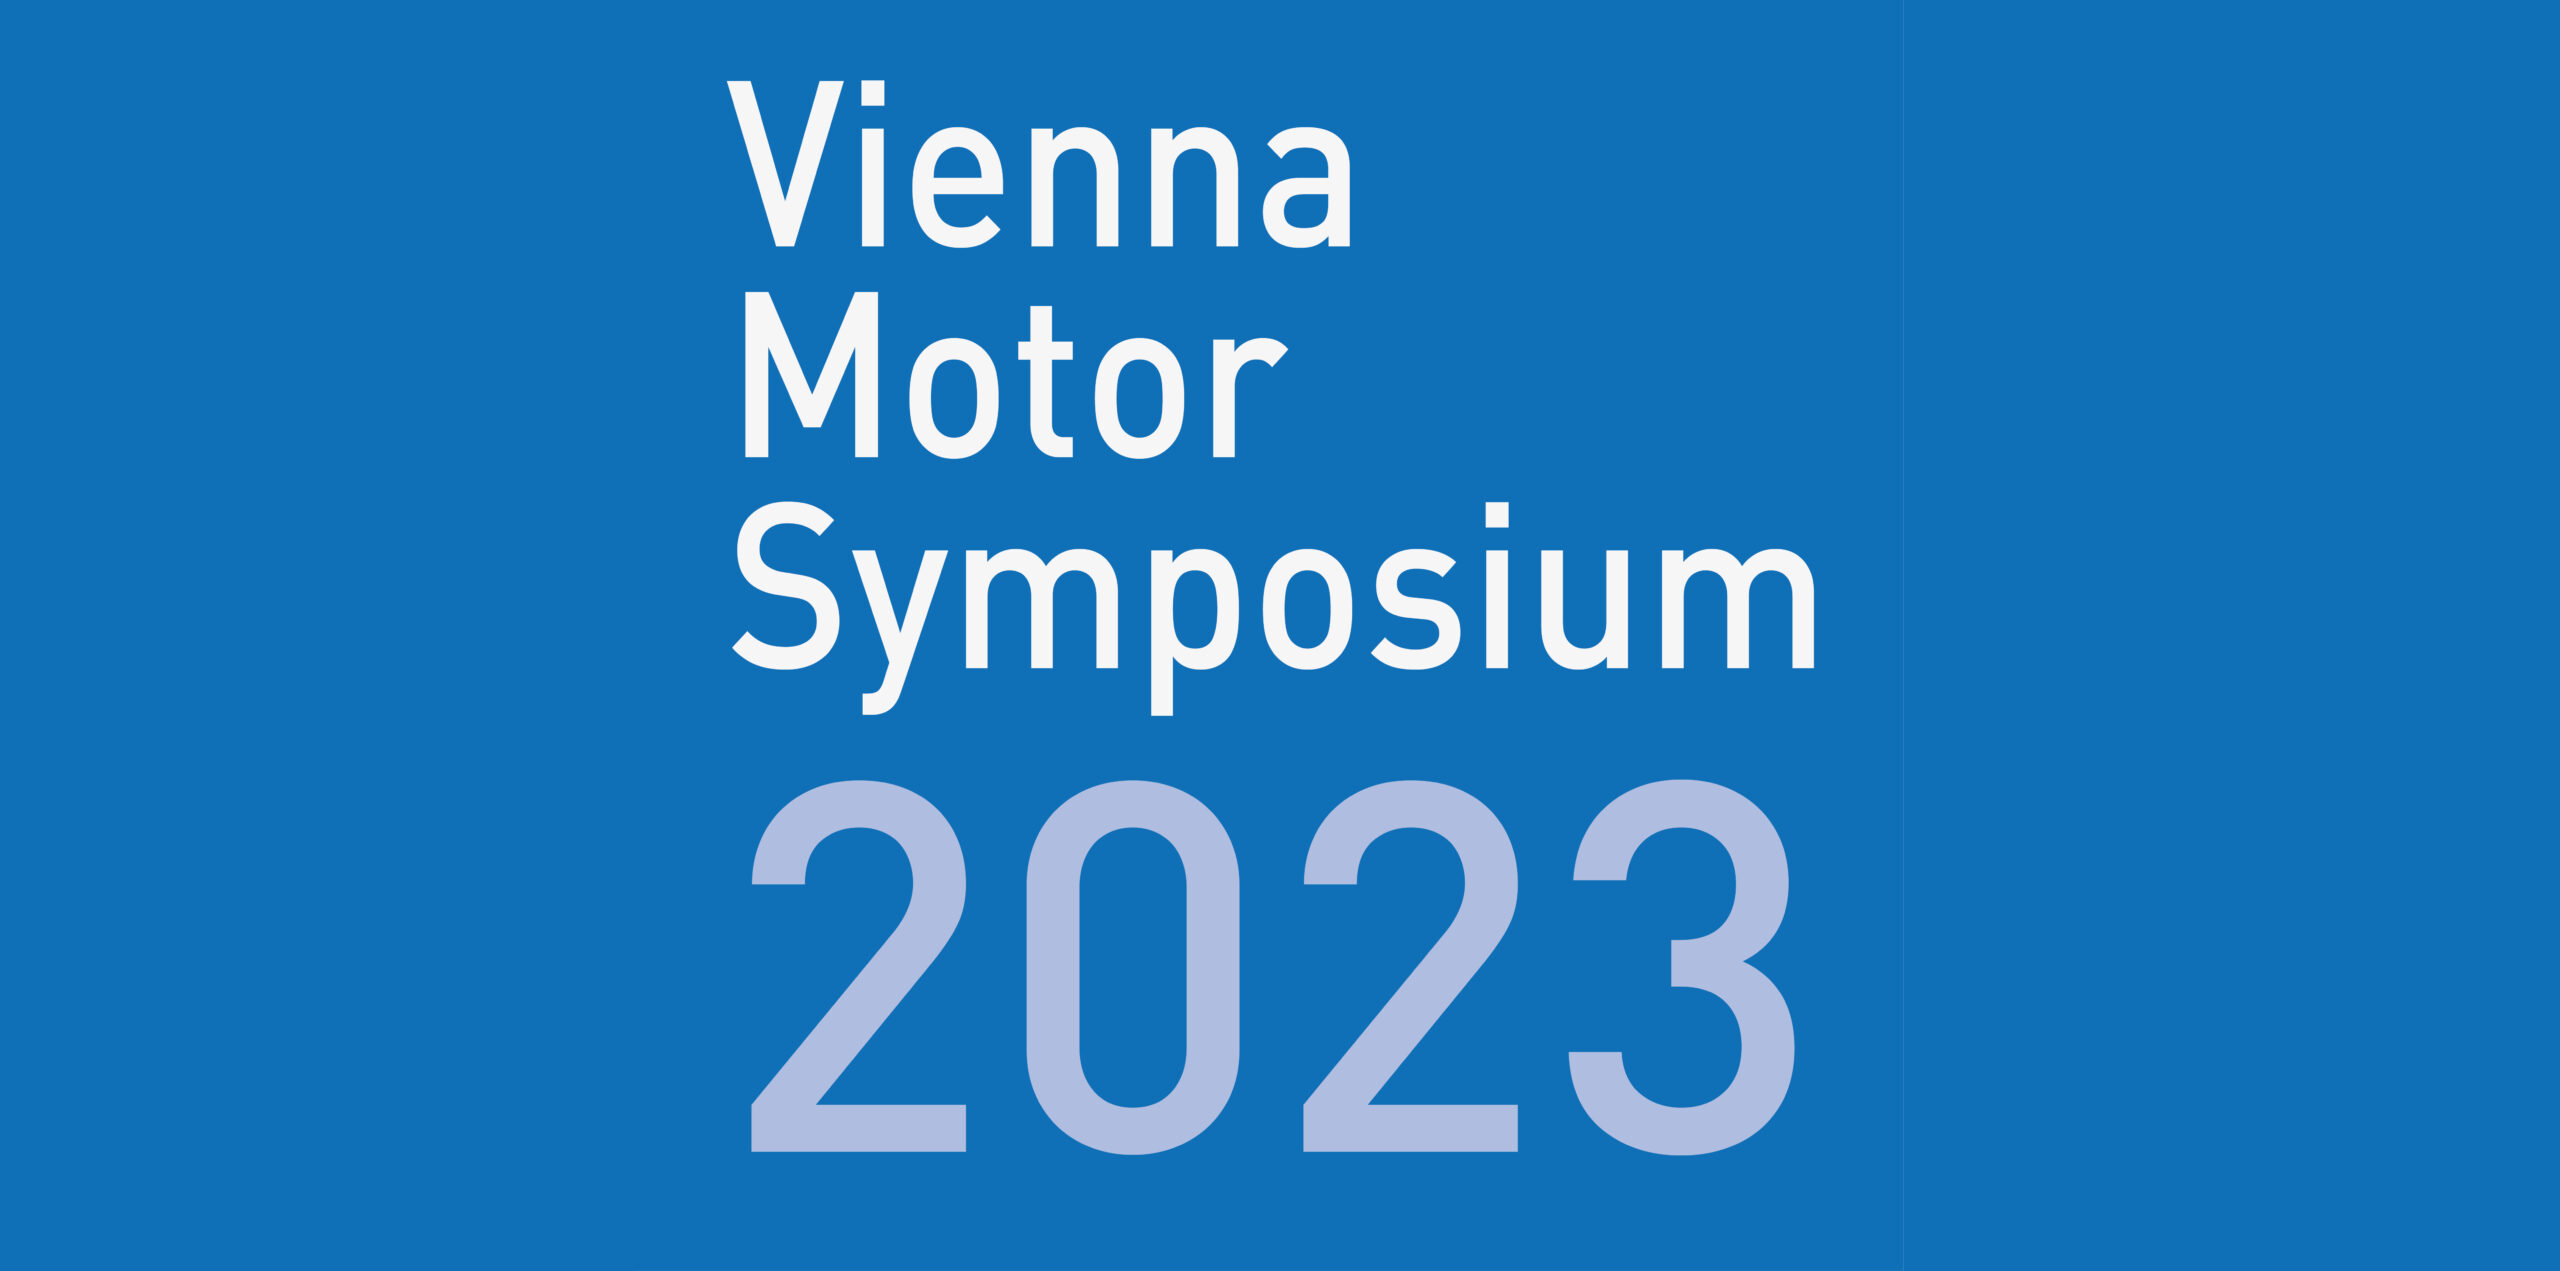 Logo des Wiener Motorensymposiums